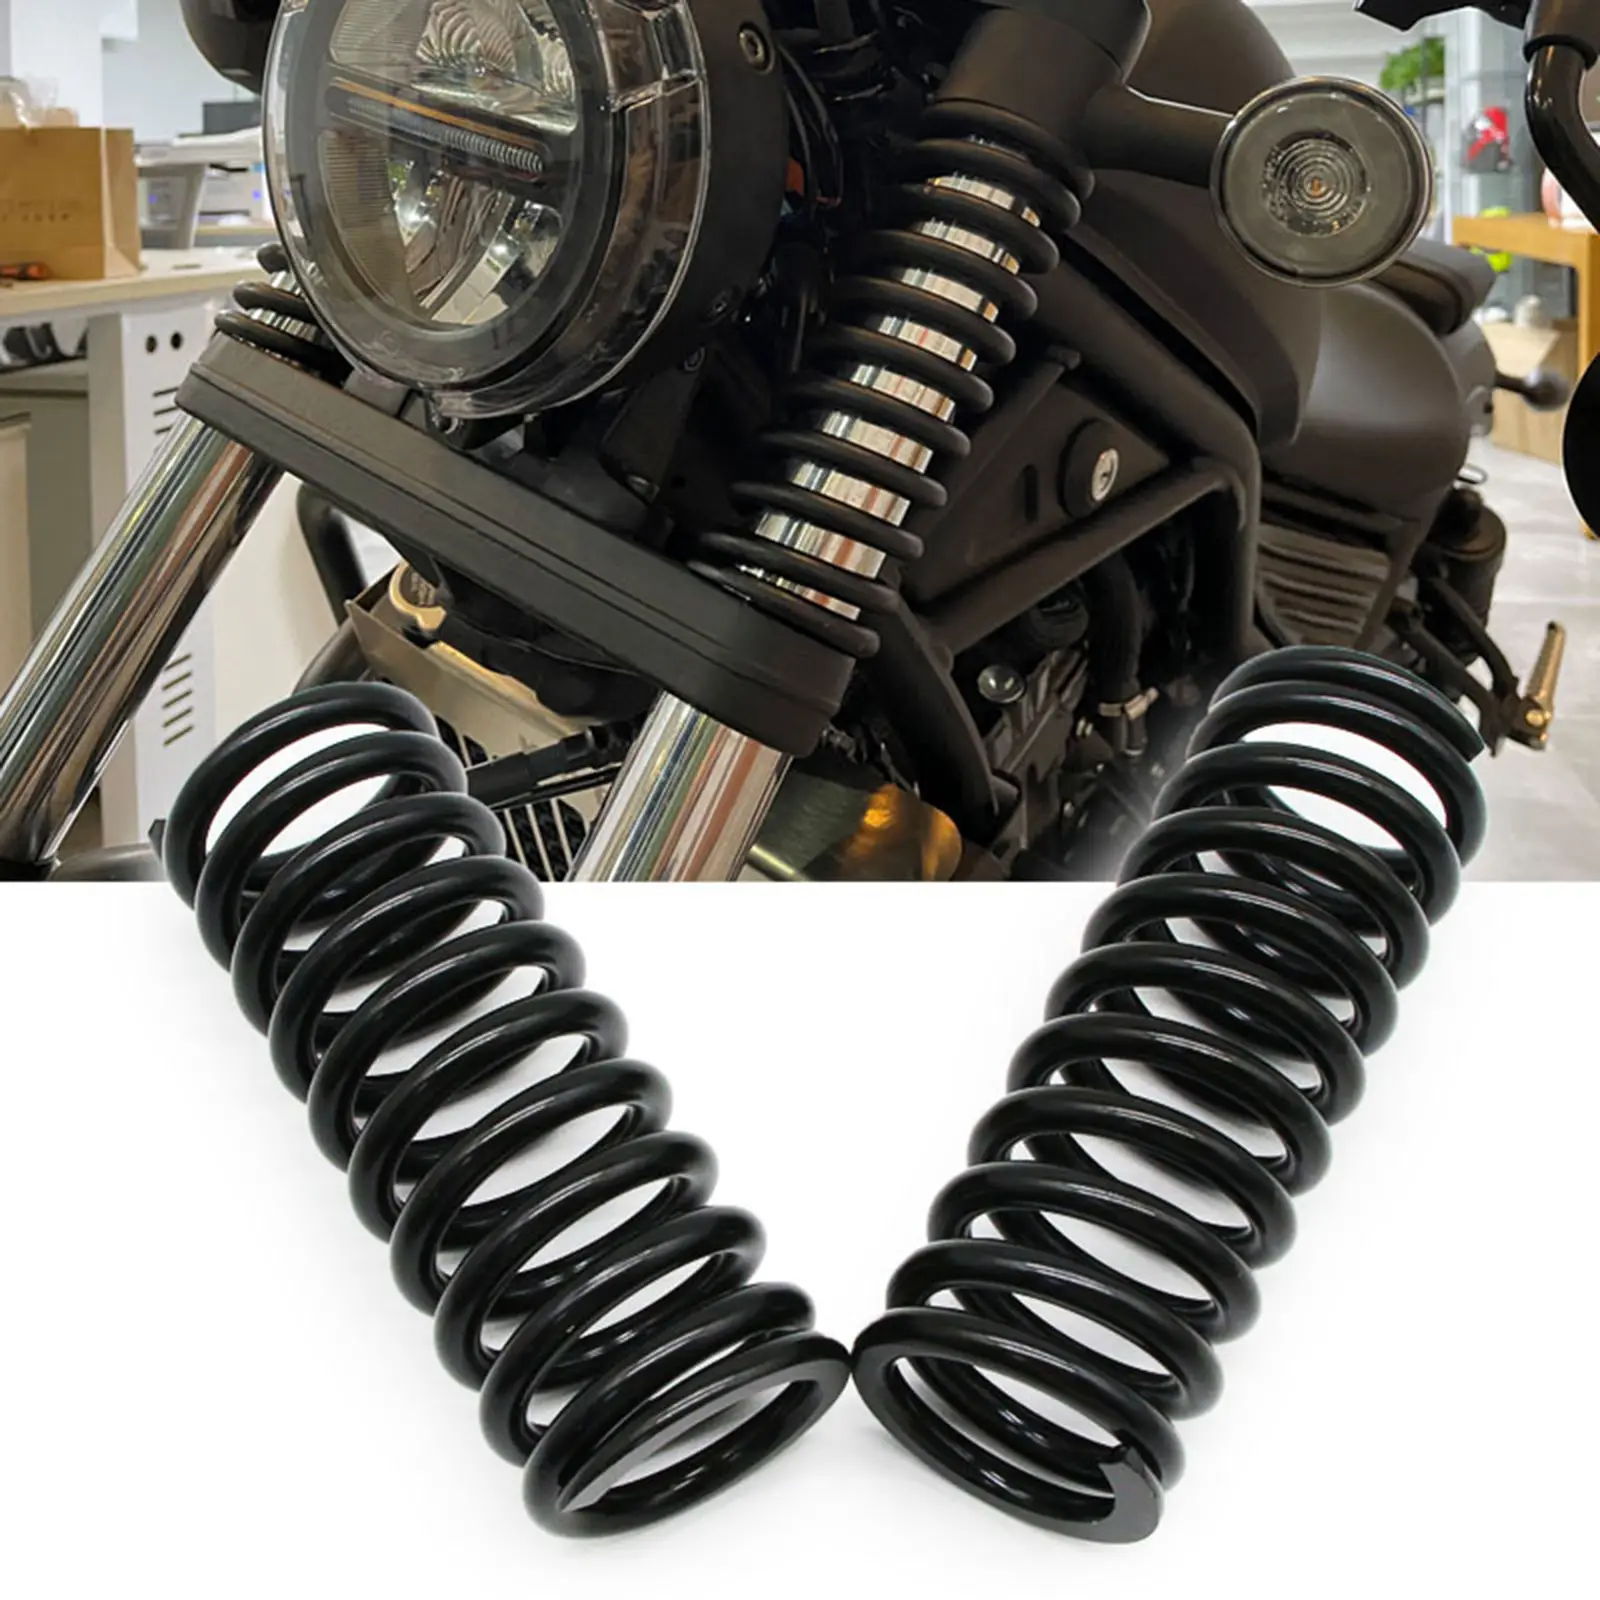 

2 Pieces Motorcycle Front Fork Shock Absorber Protective Sleeve Damper Springs for Rebel CM500 CM300 2017-2021